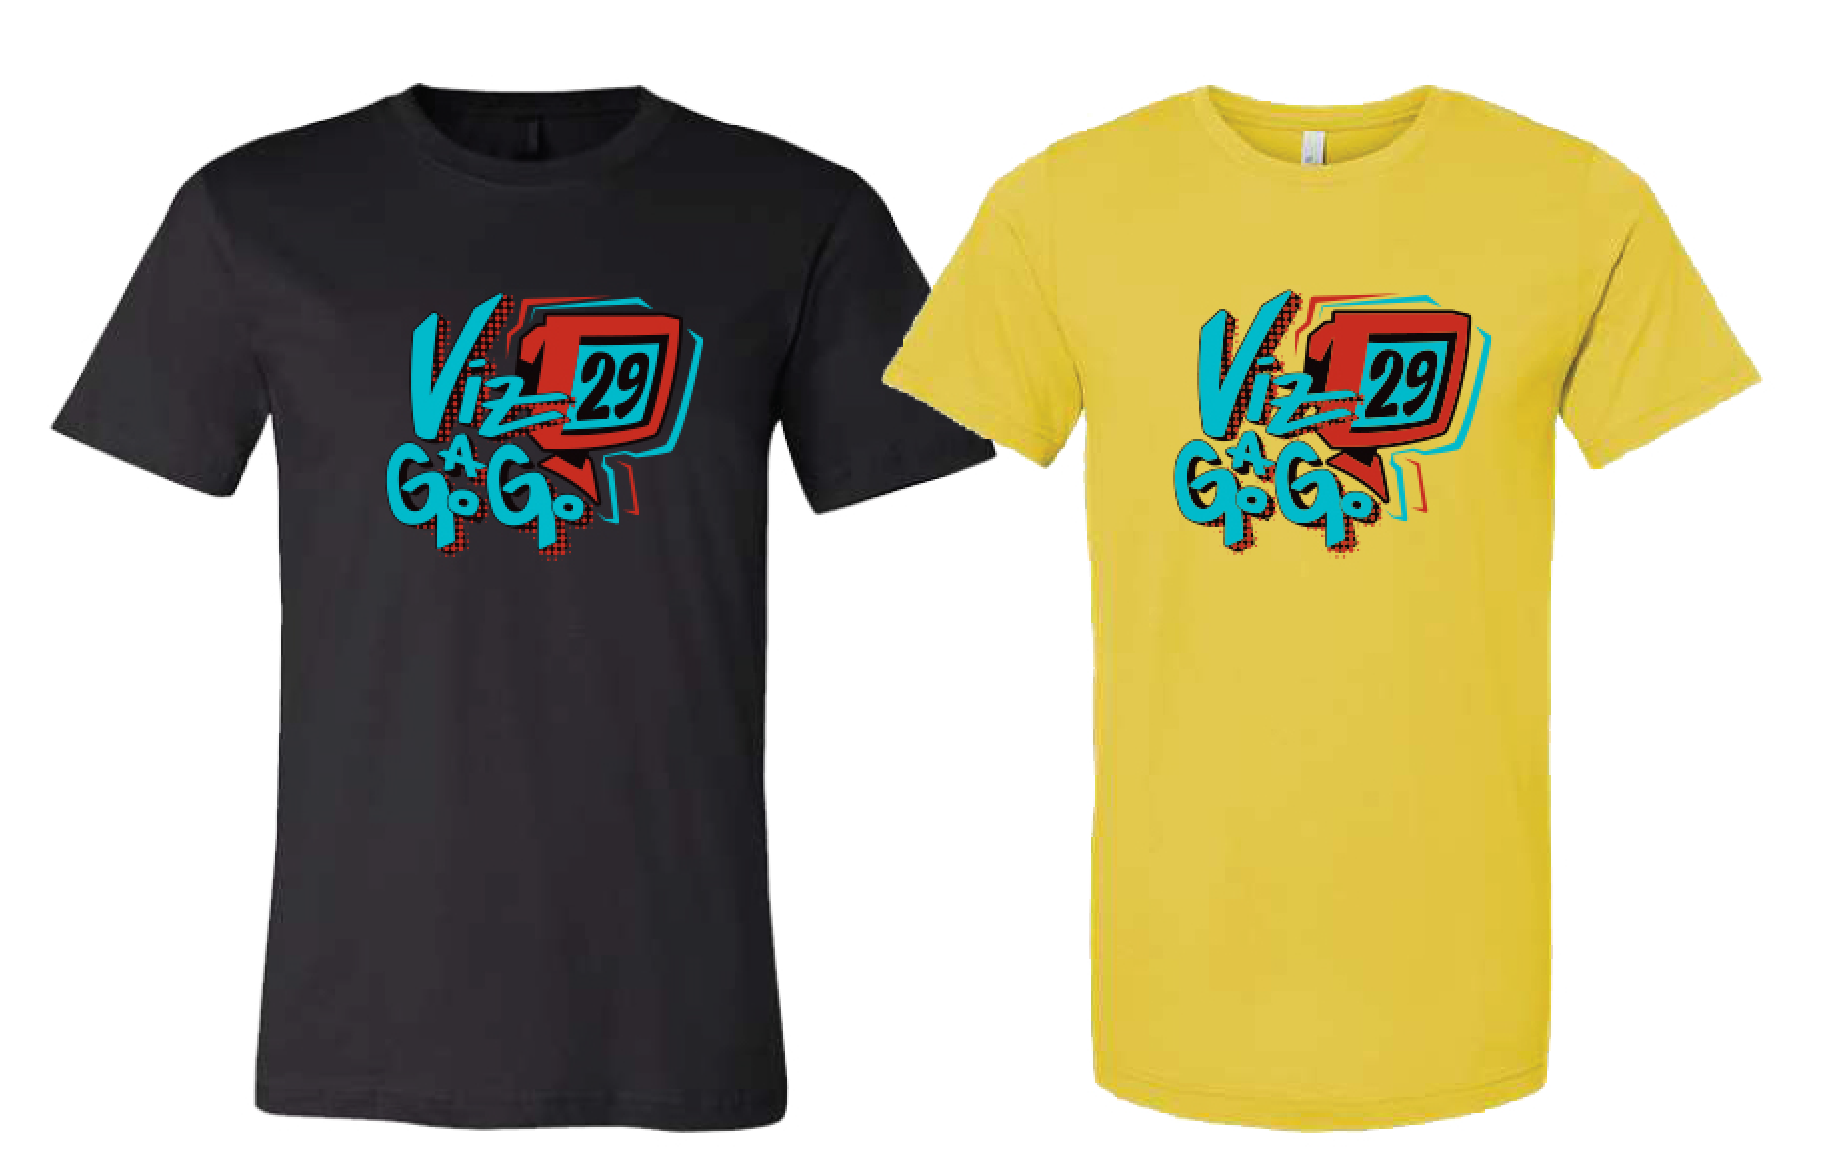 Viz-a-GoGo 29 T-shirts